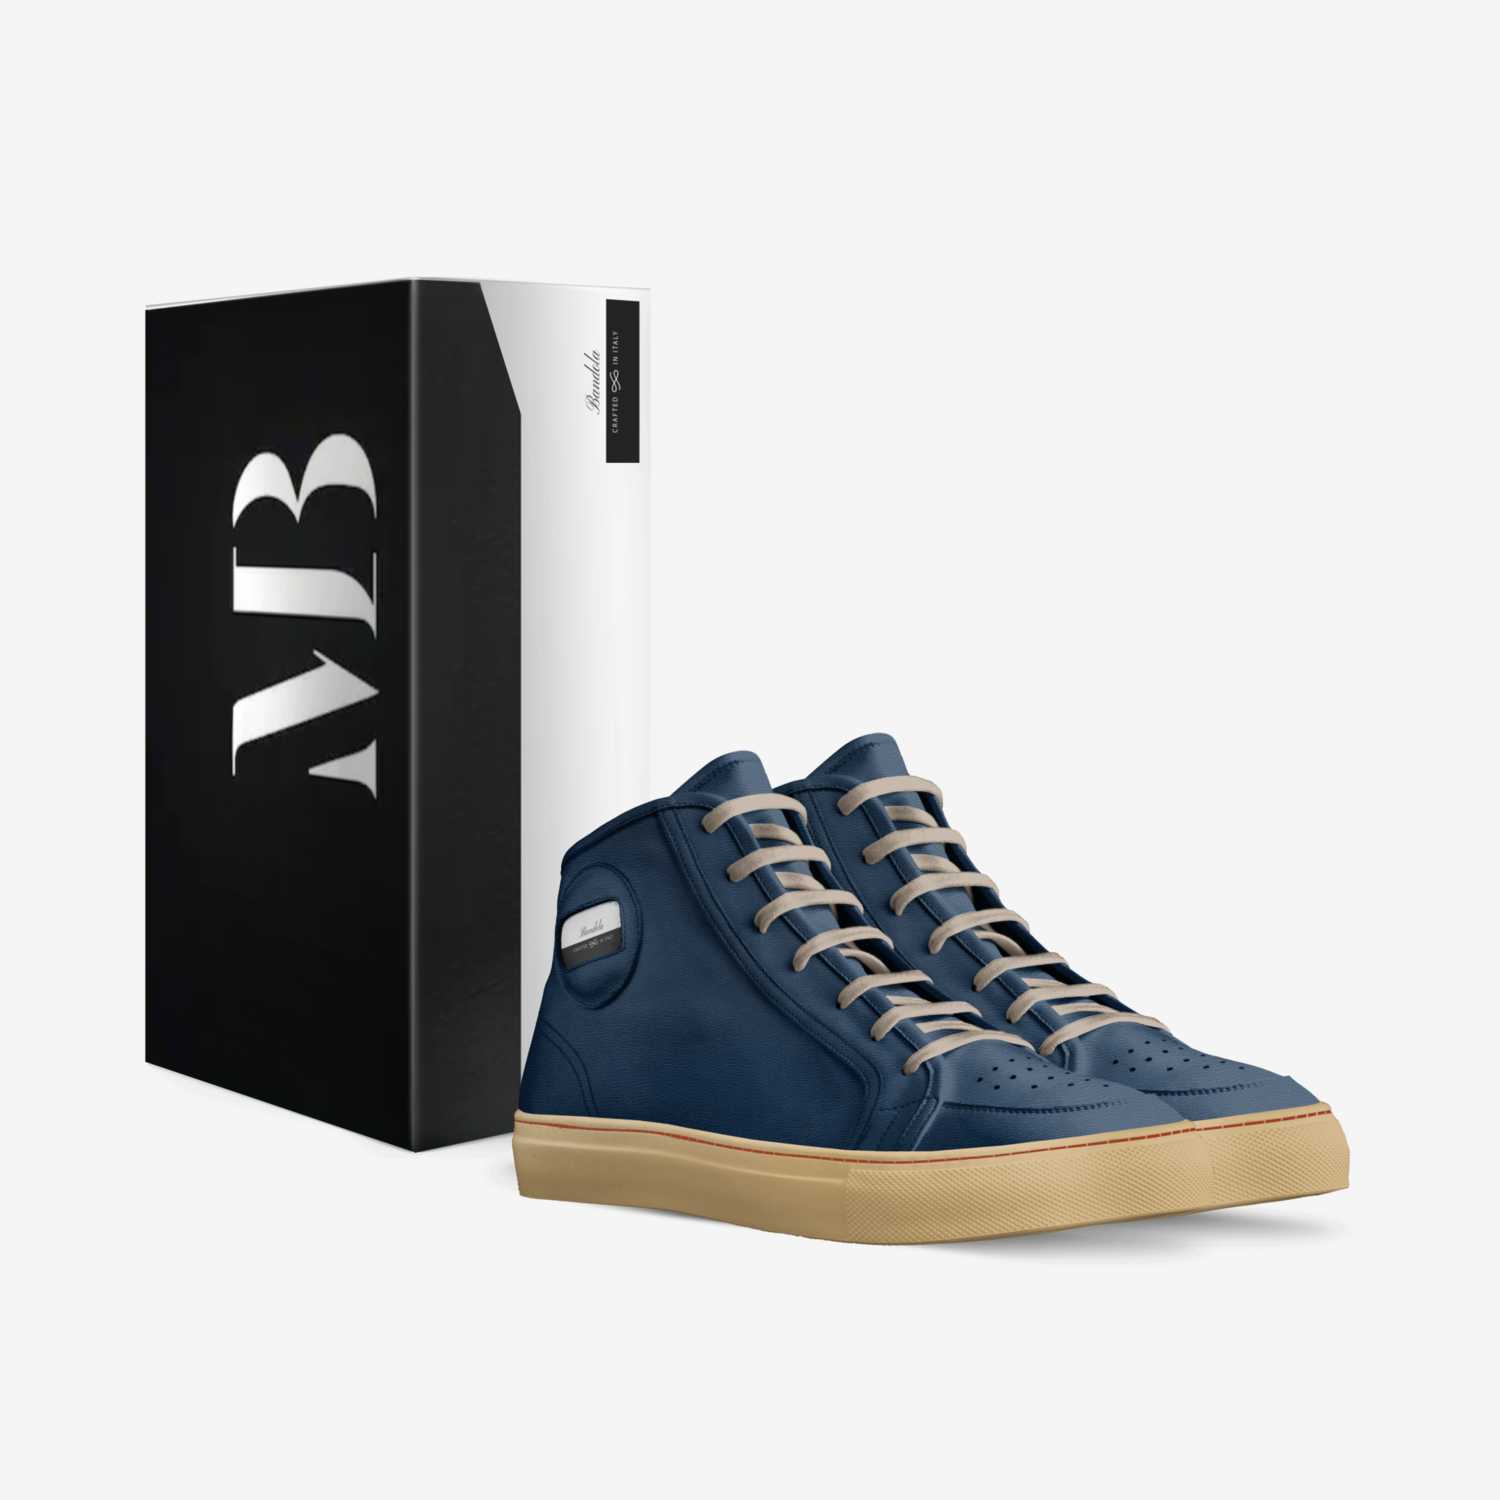 Bandola custom made in Italy shoes by Marc Bandola | Box view